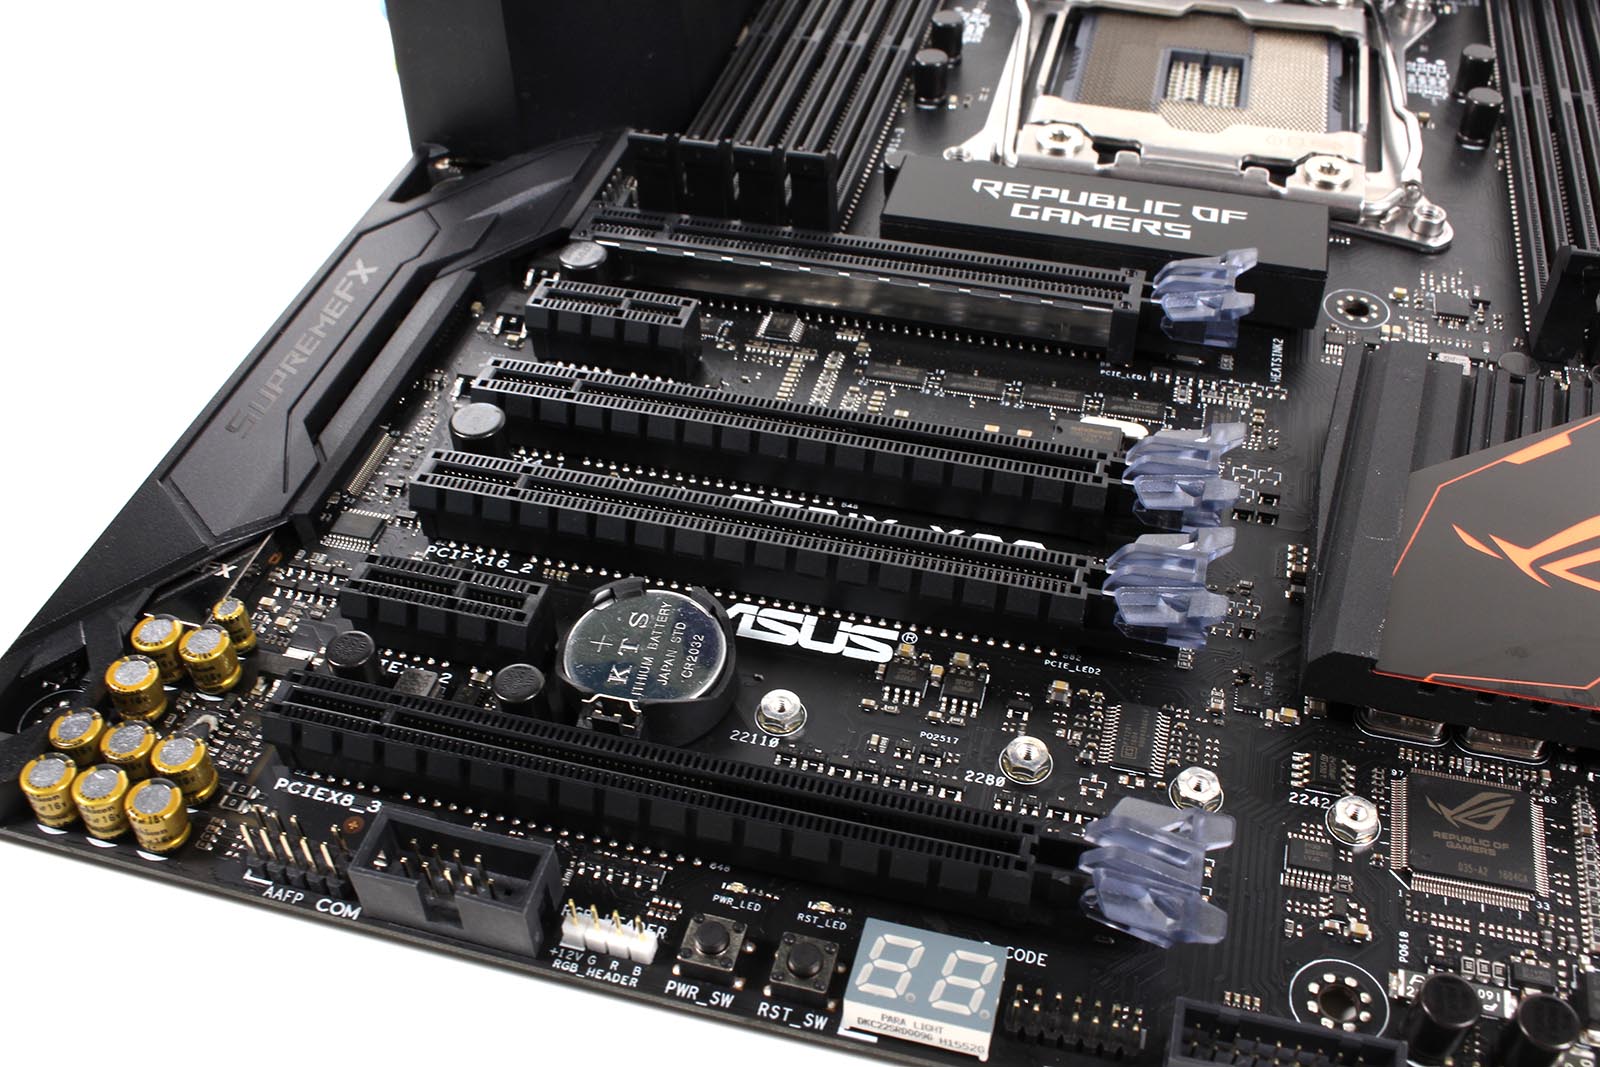 Asus Strix X99 Gaming - PCIe Slots